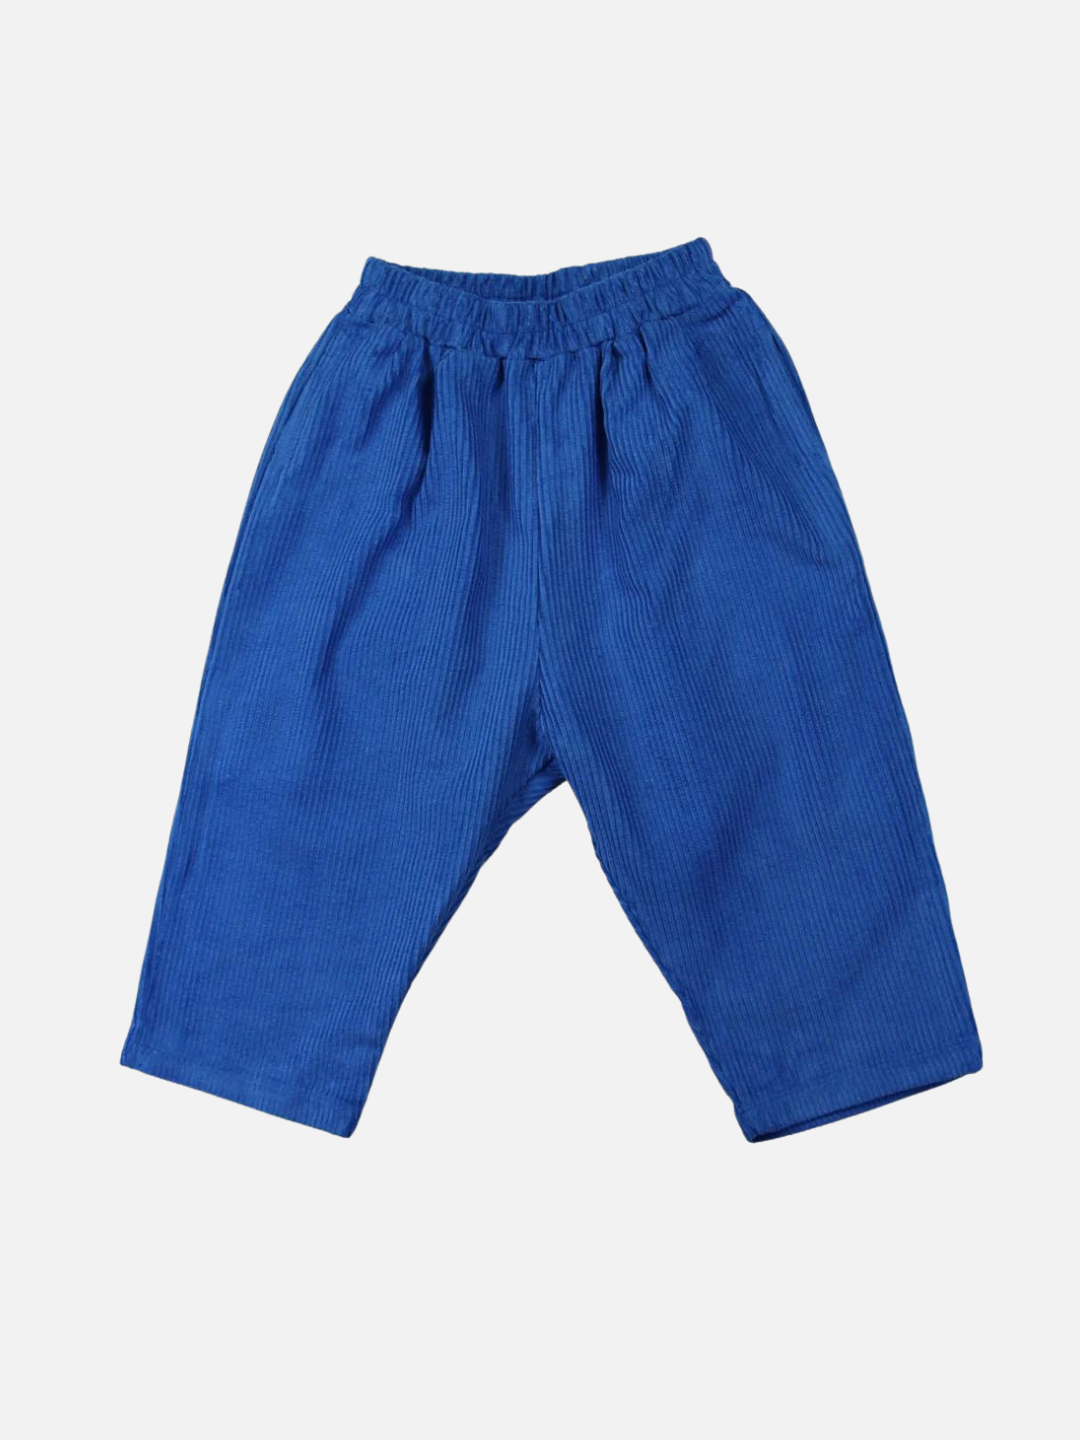 Blue kids' pants, front view